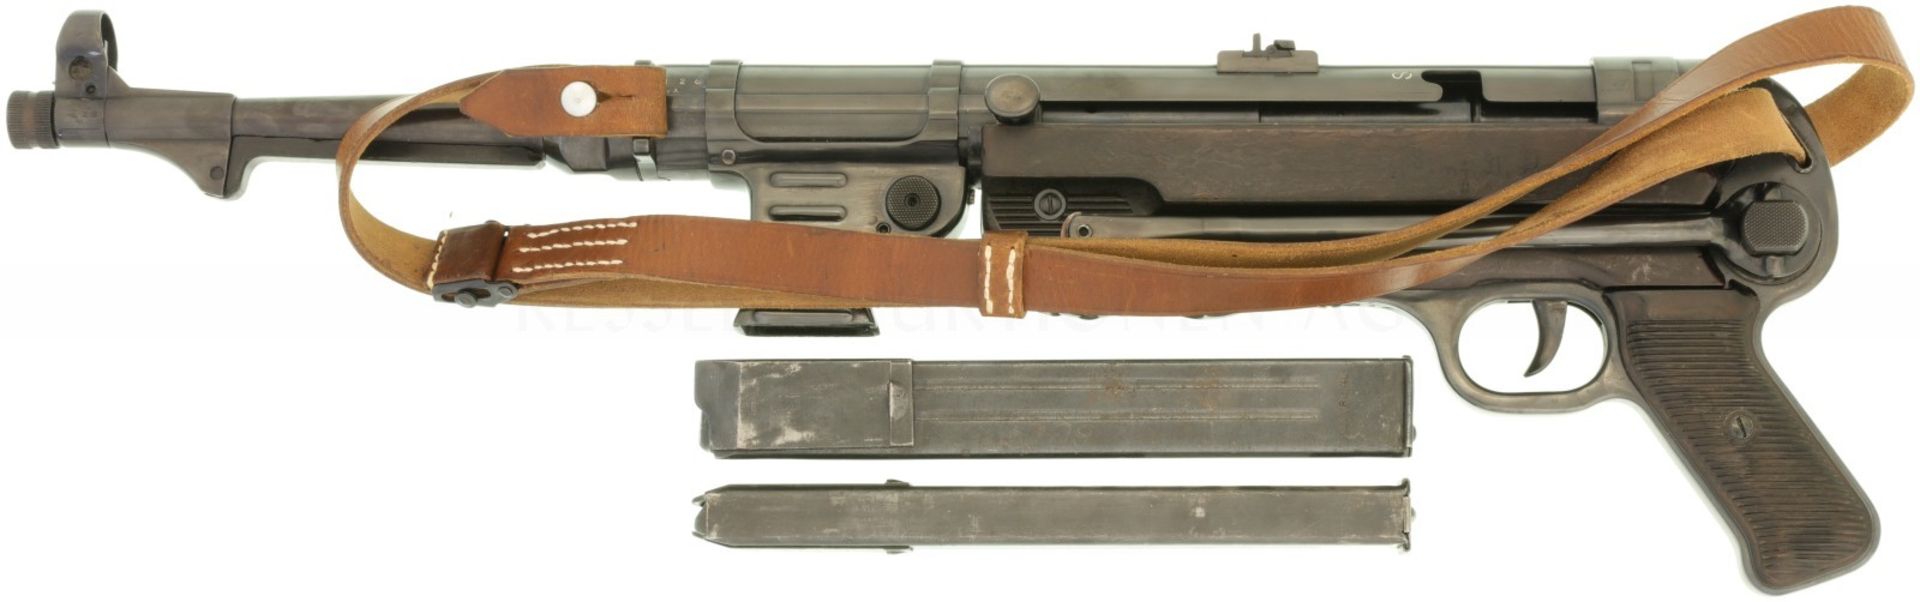 Maschinenpistole, MP 40, fxo 42 (Haenel, Suhl) Kal. 9mmP